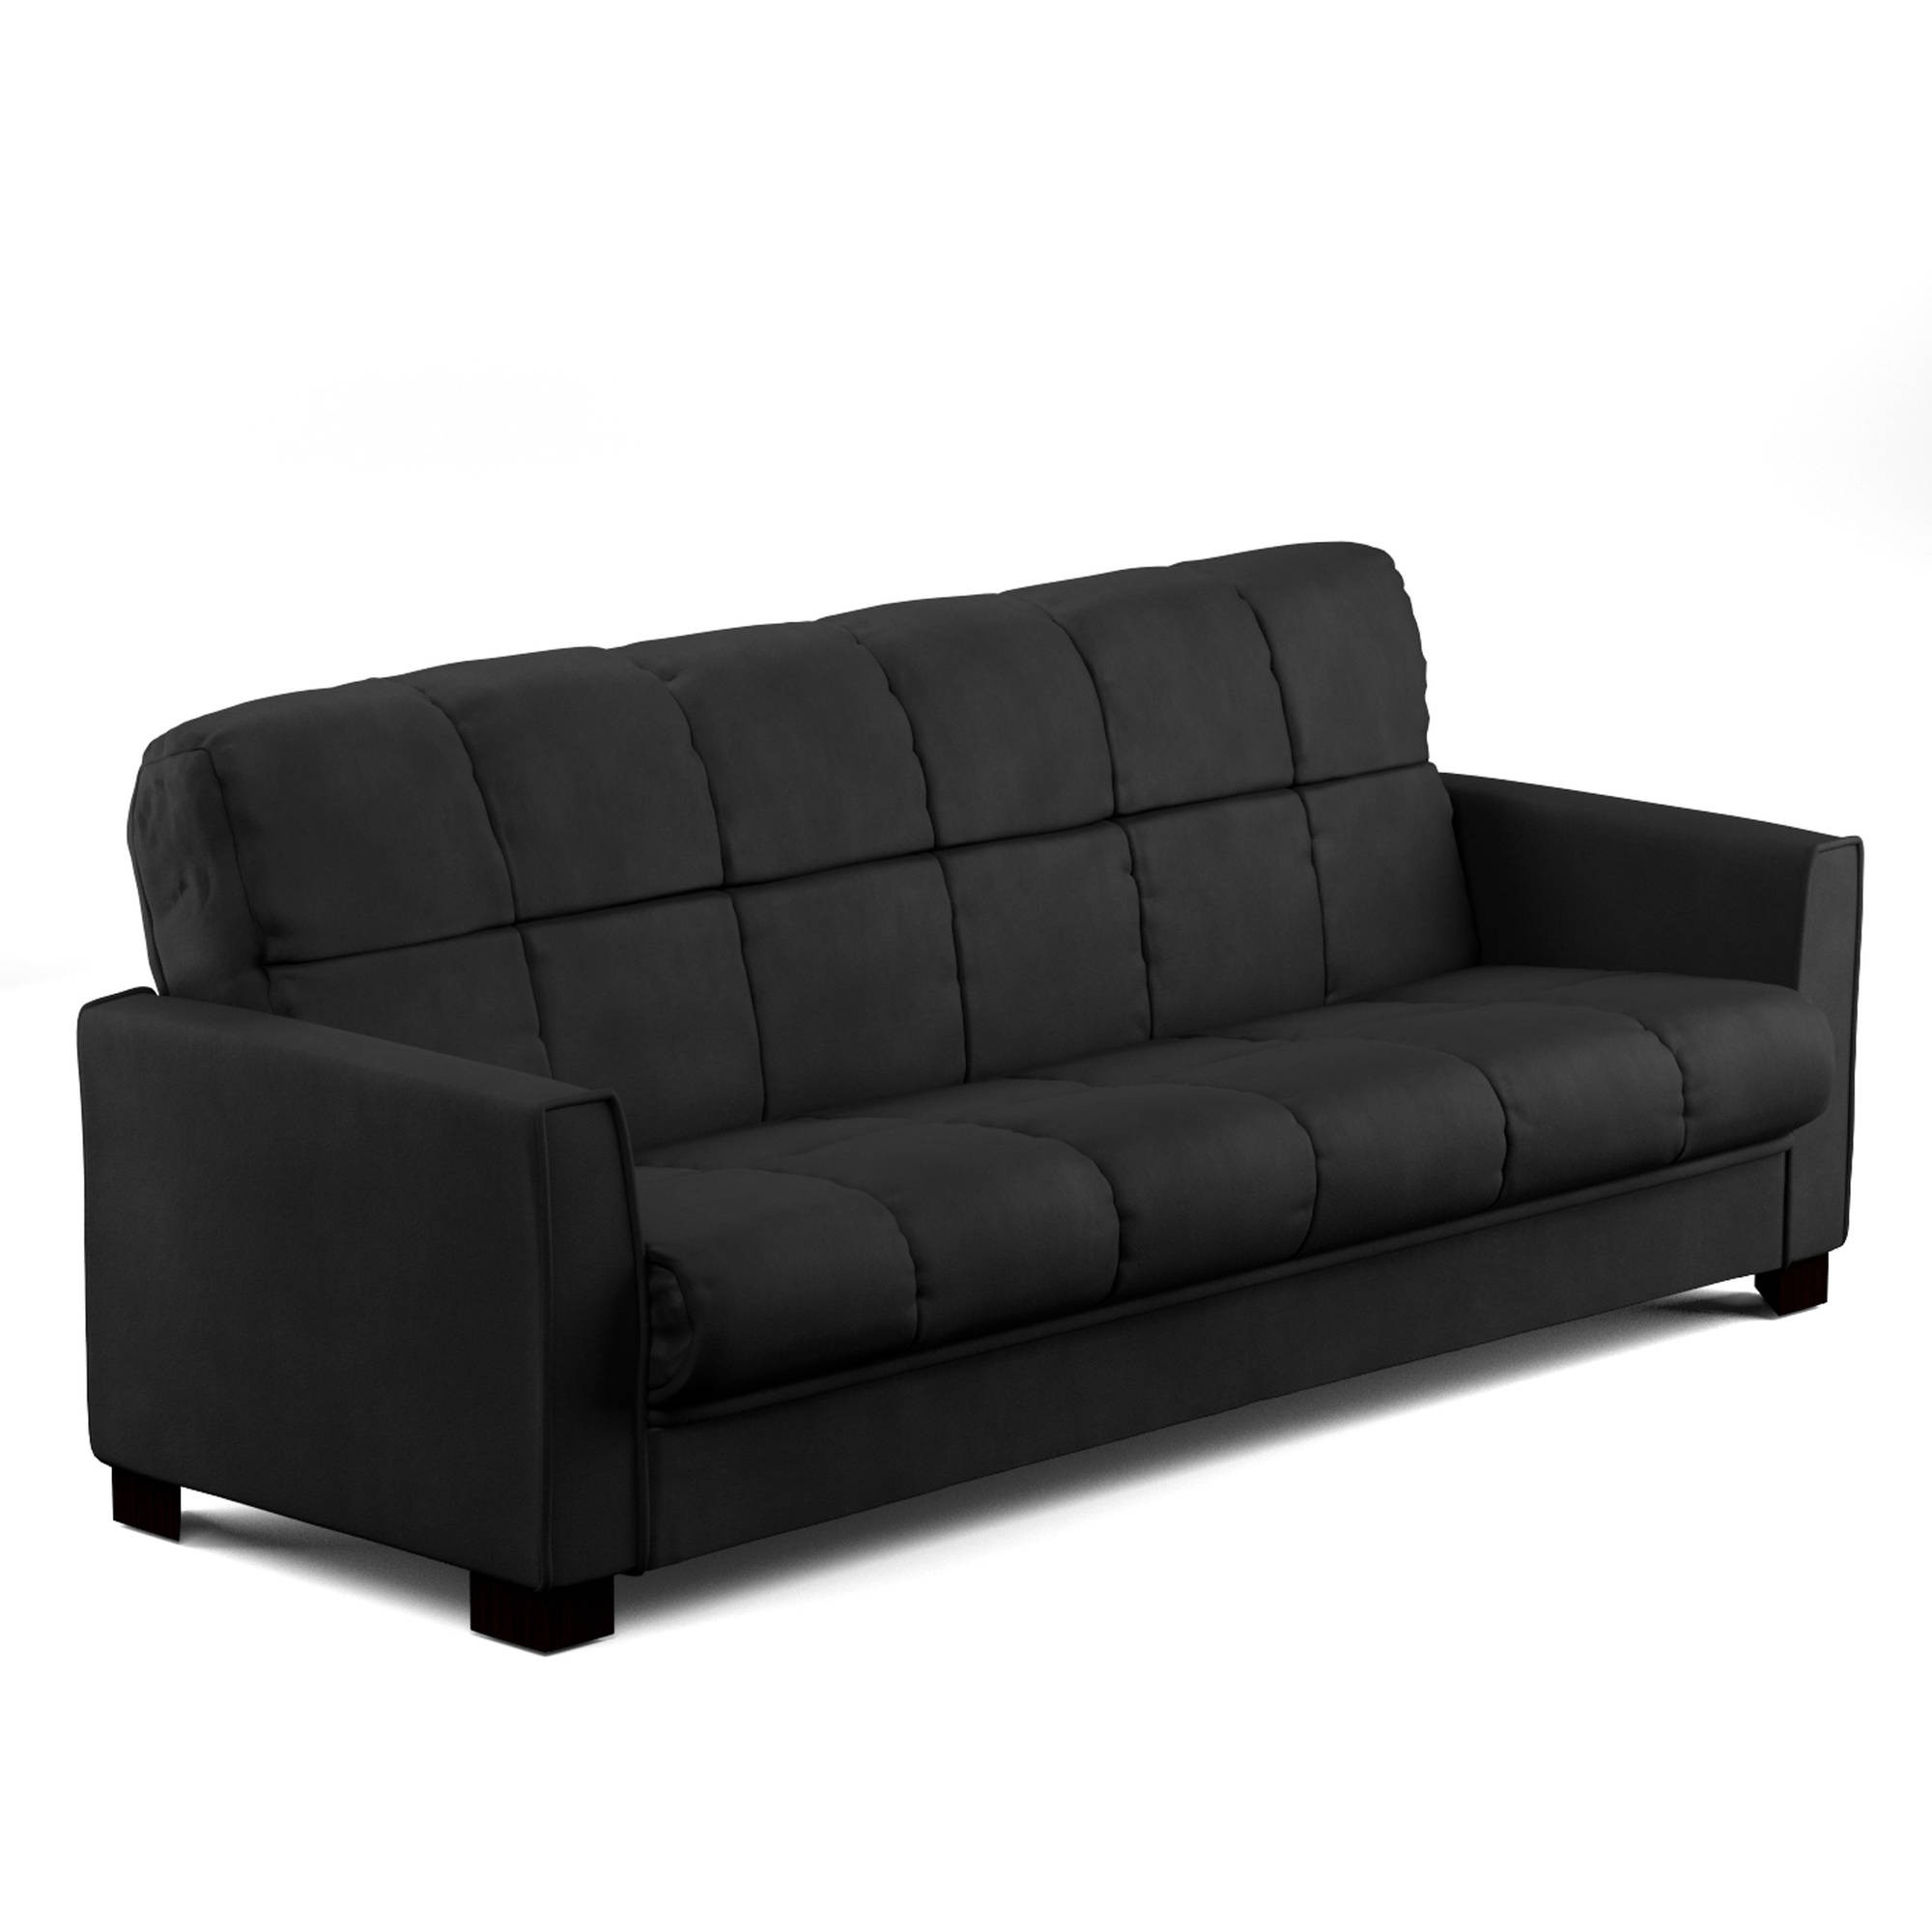 Best ideas about Sleeper Sofa Walmart
. Save or Pin Walmart Sleeper sofa Now.